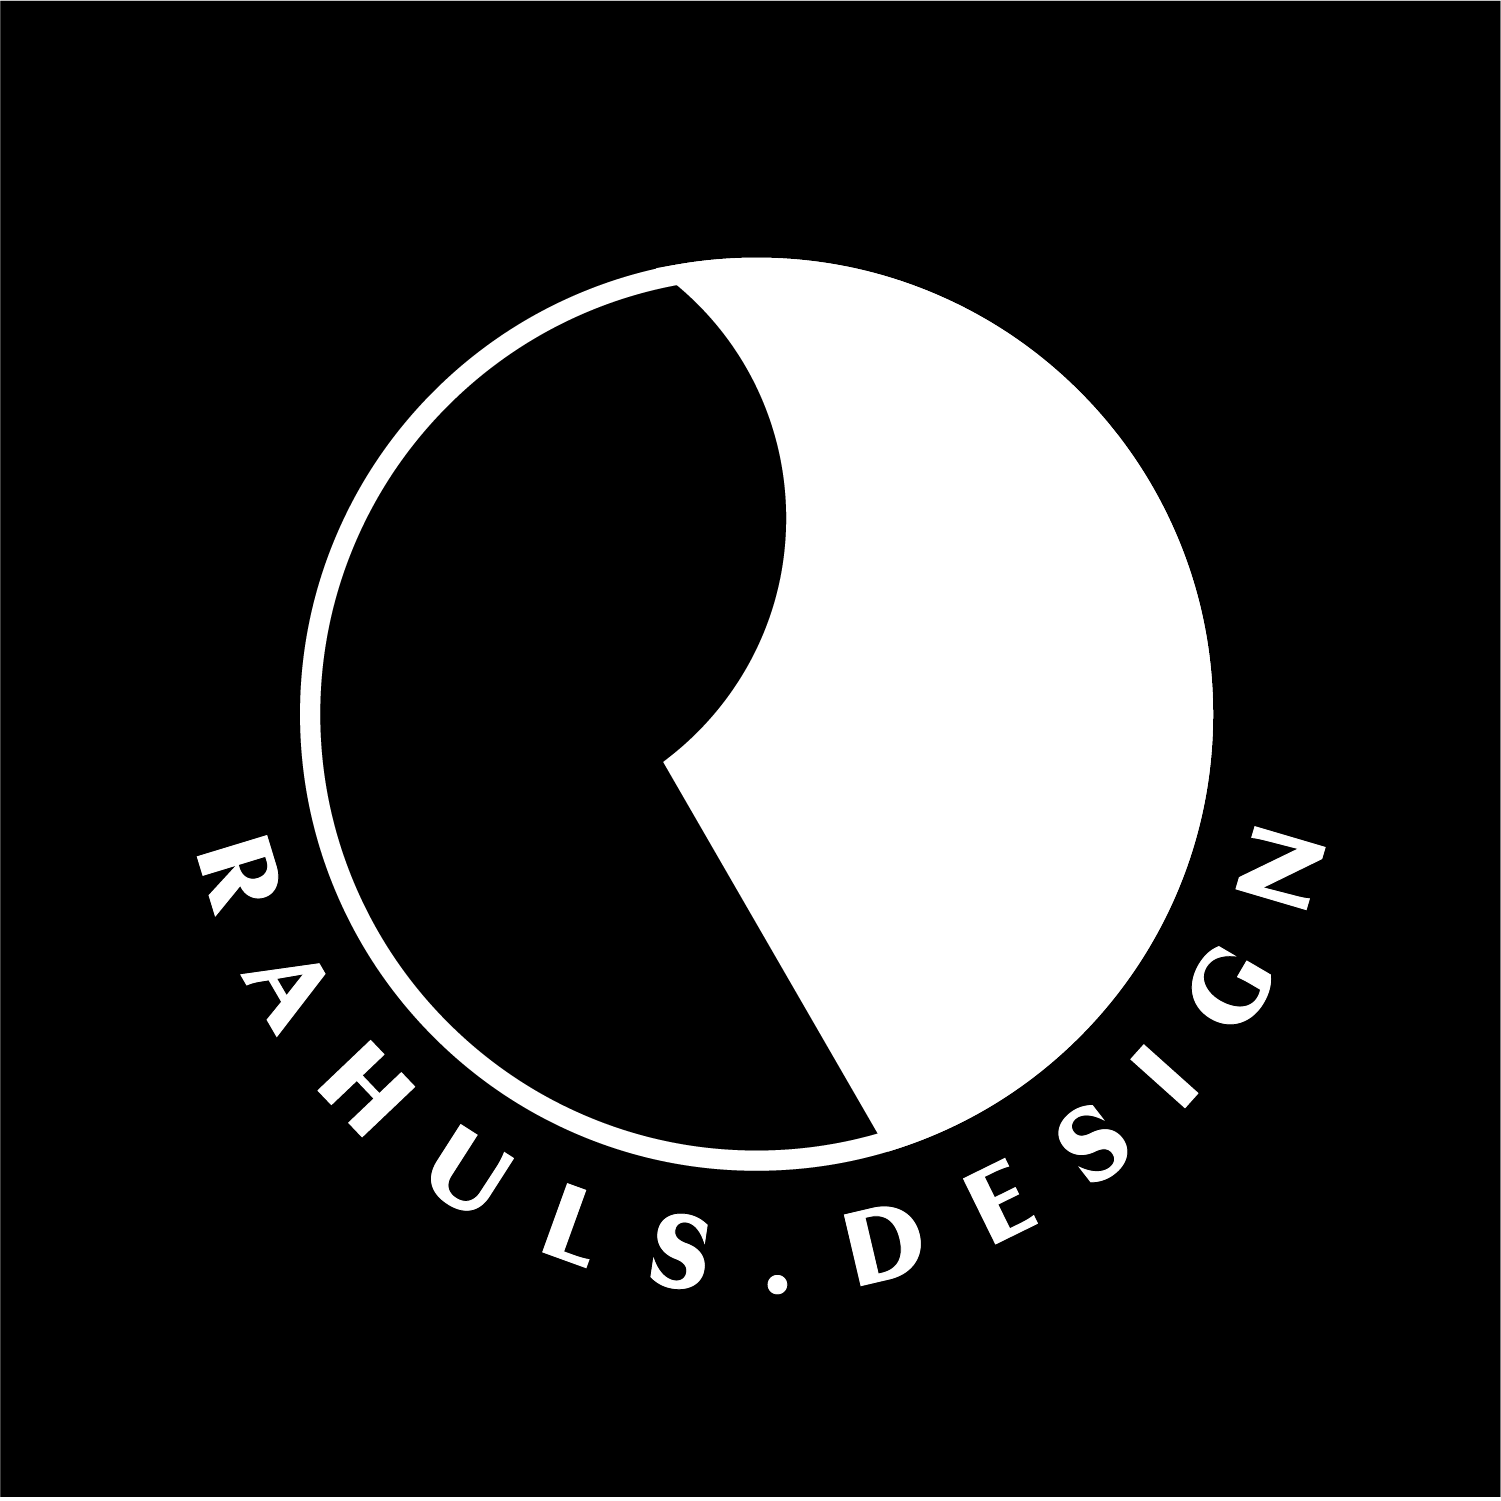 rahuls.design